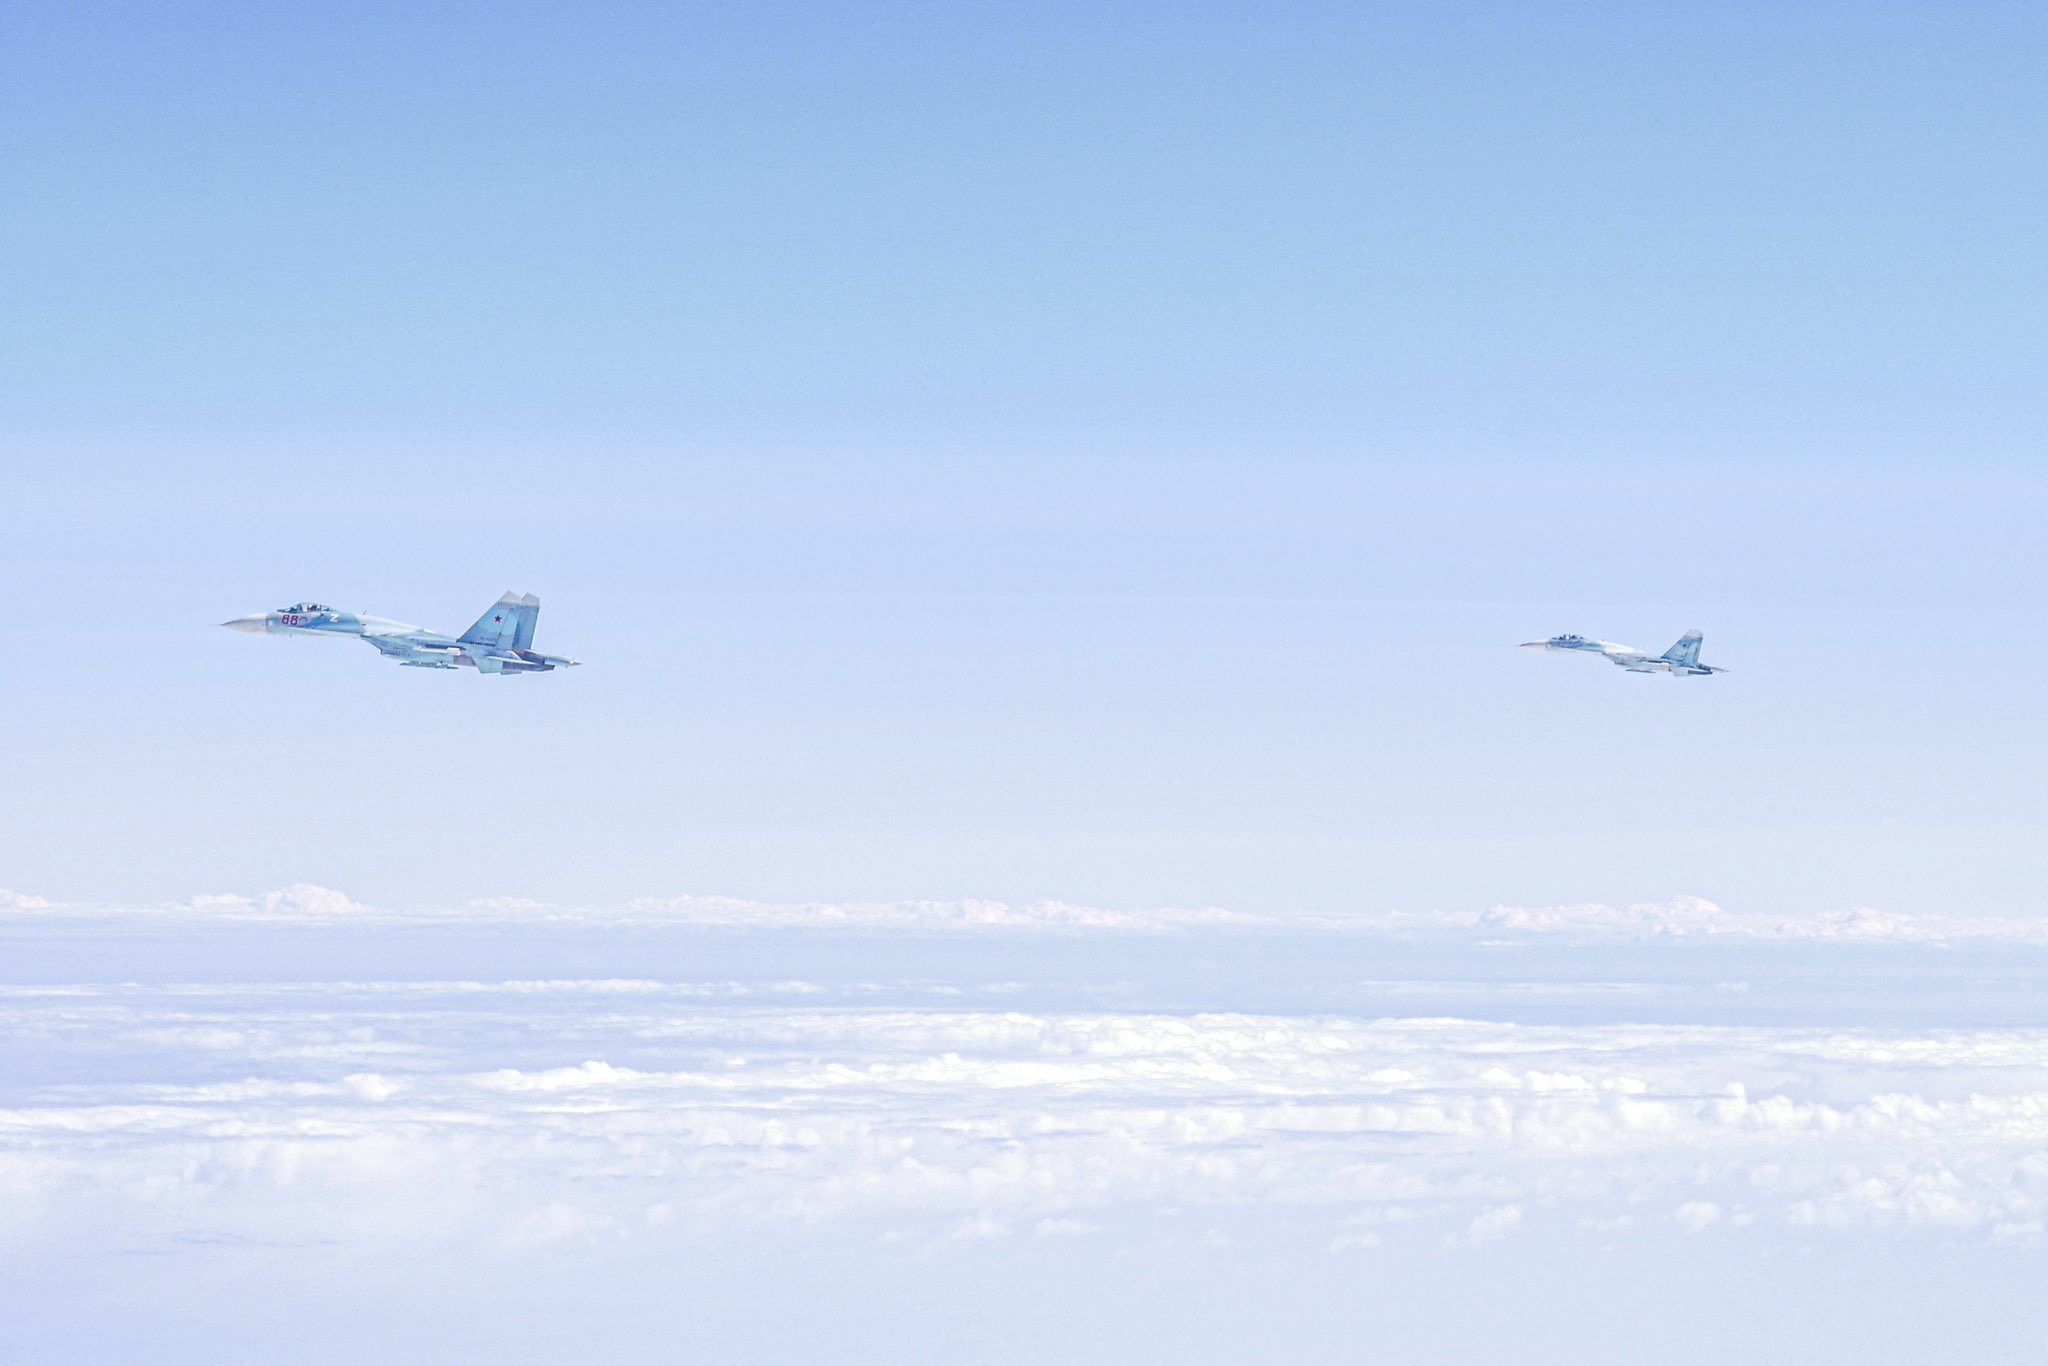 Royal Air Force en Luftwaffe Eurofighter Typhoon gevechtsvliegtuigen onderscheppen drie Russische vliegtuigen boven de Baltische Zee.